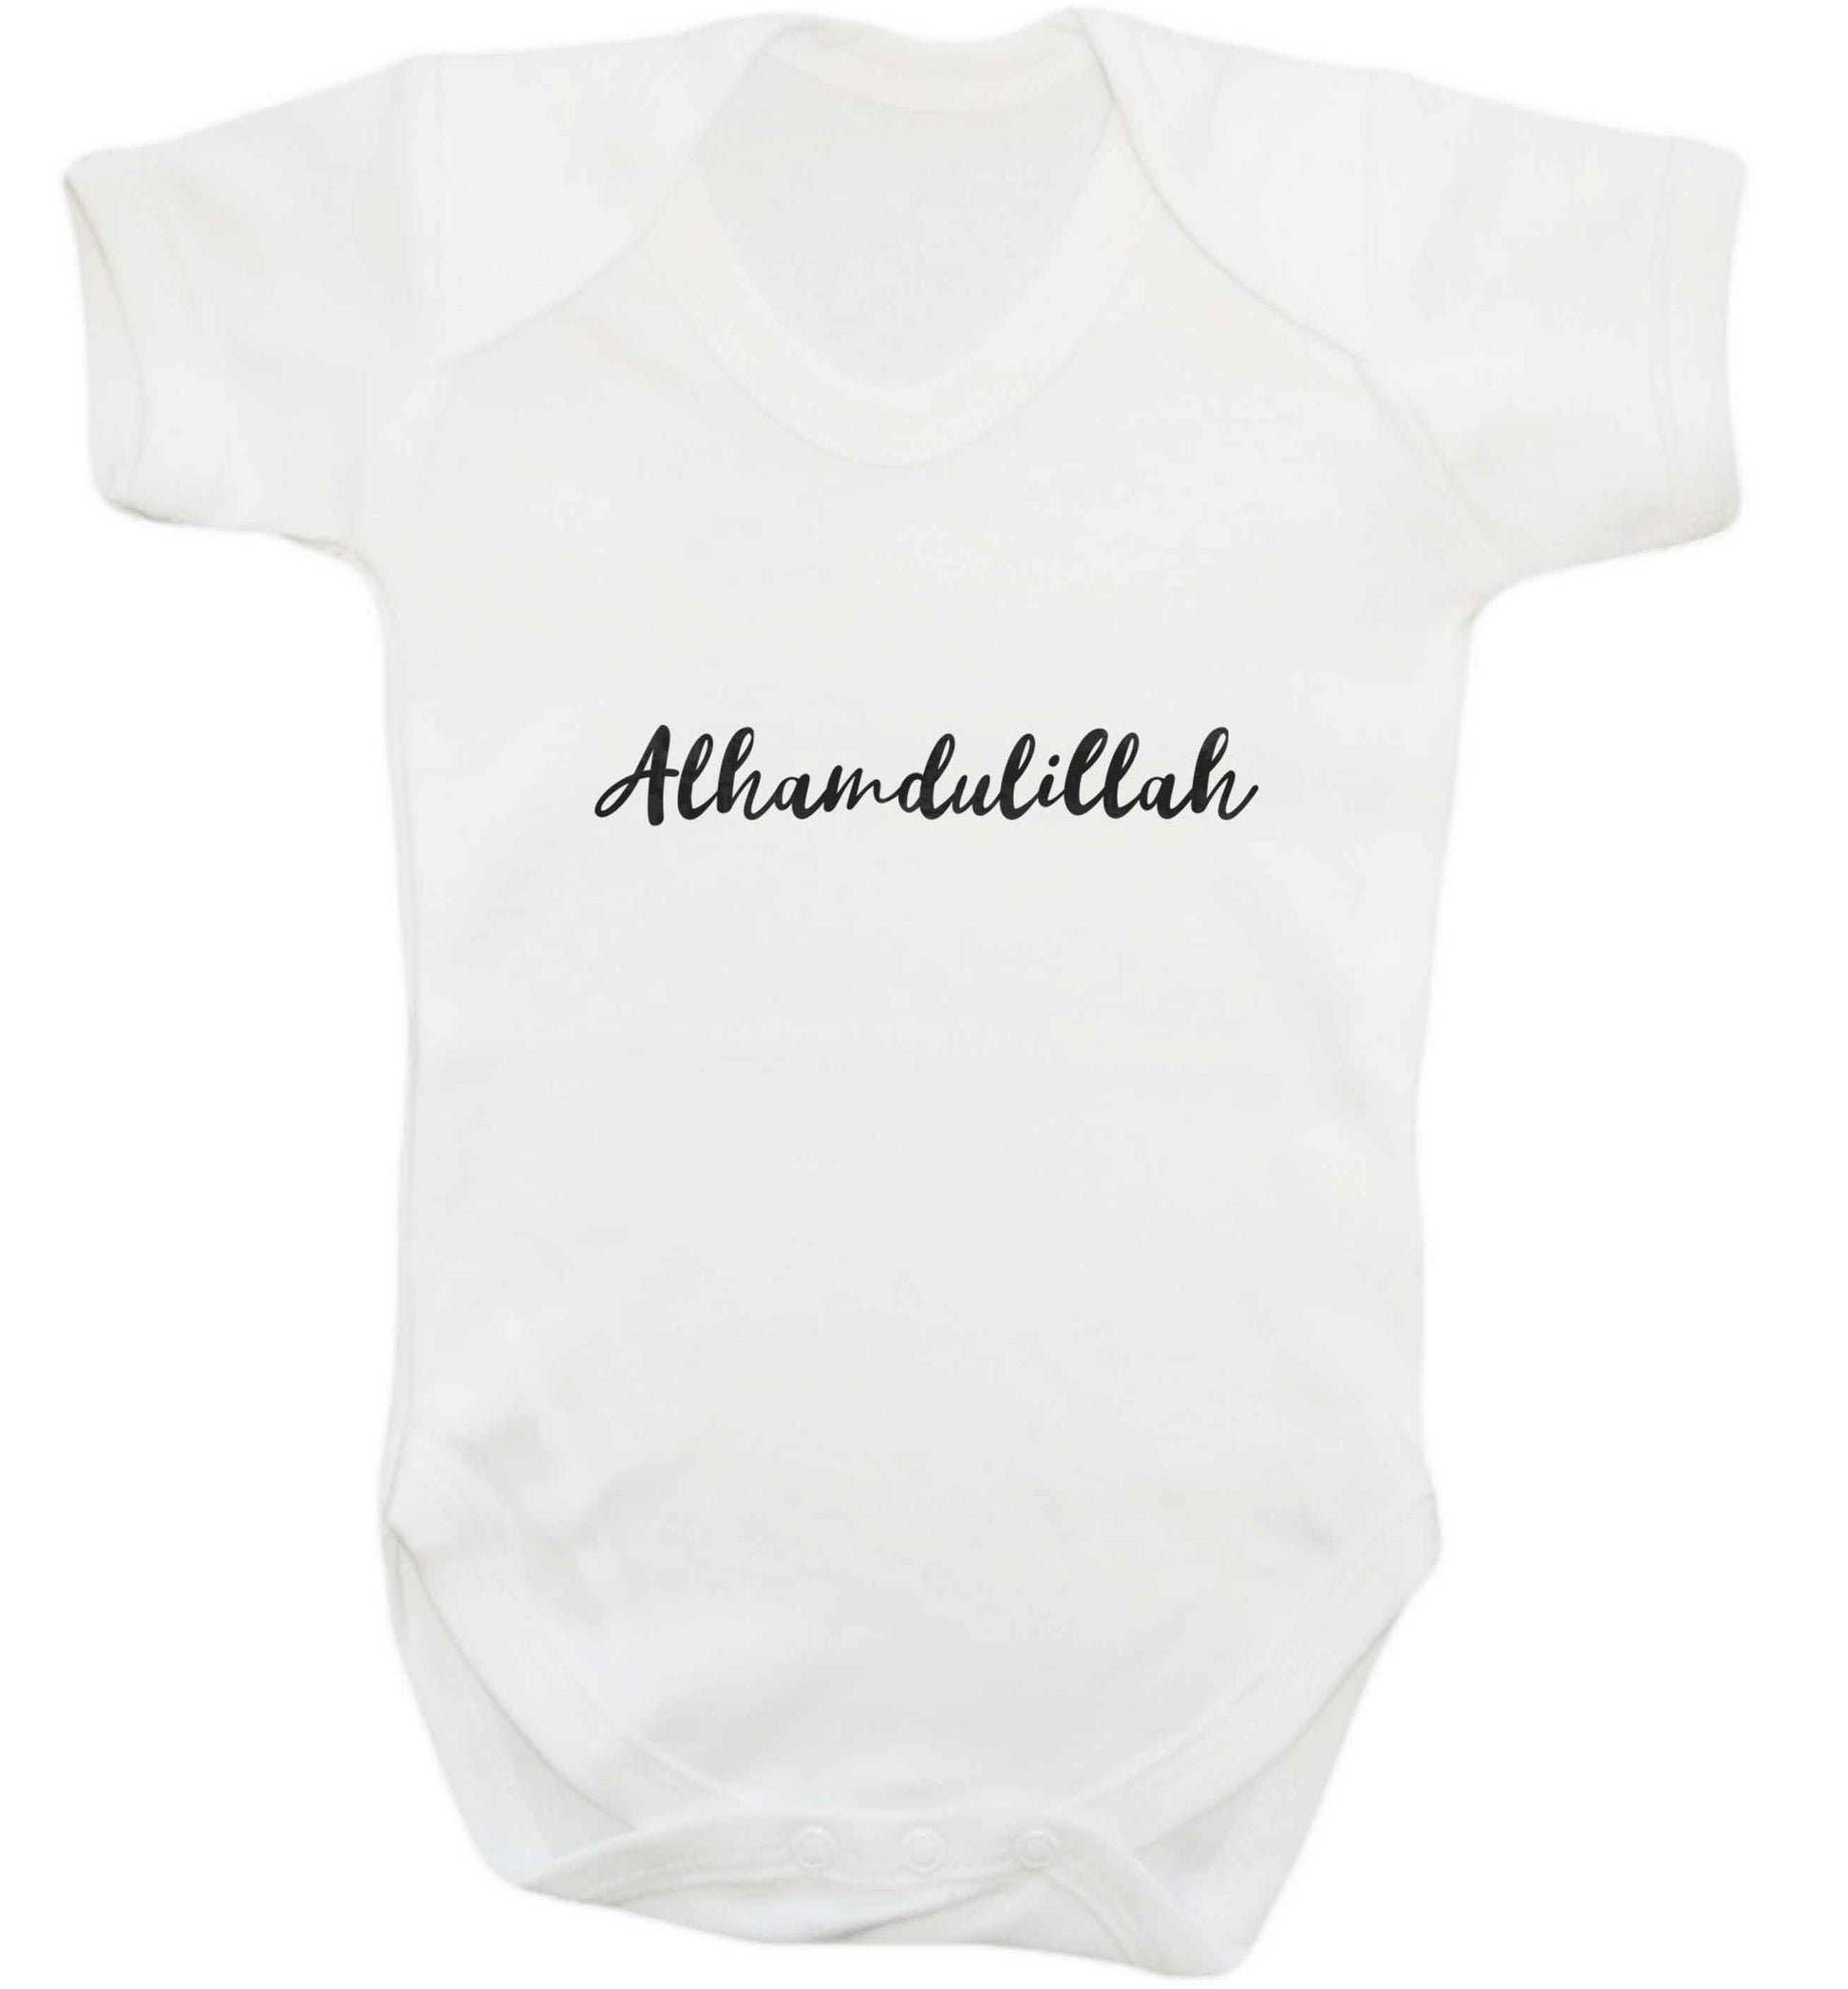 alhamdulillah baby vest white 18-24 months